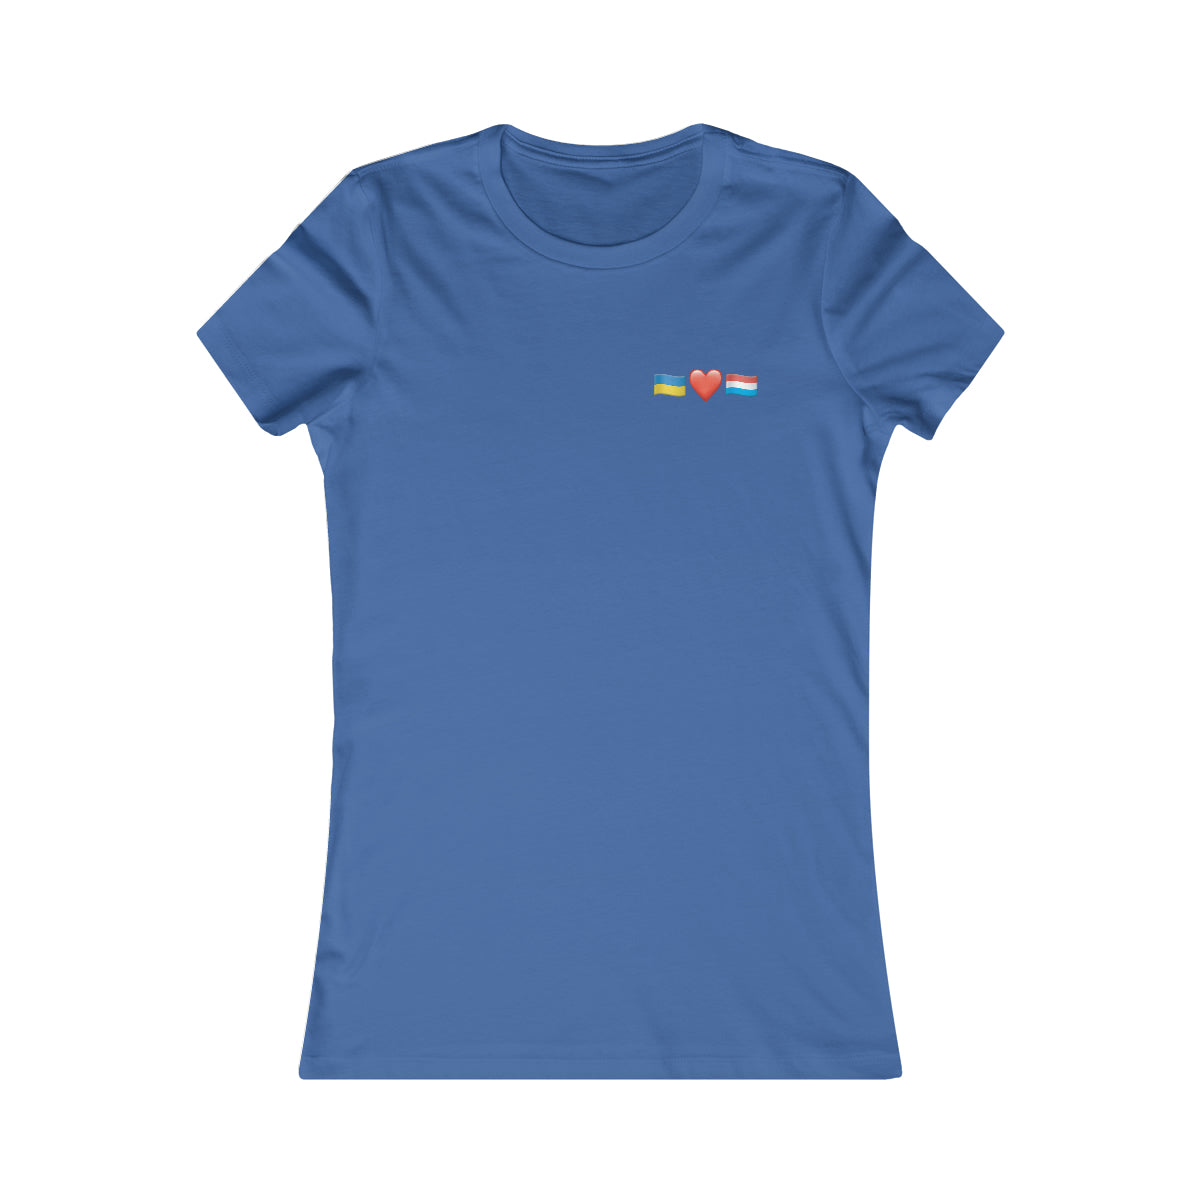 卢森堡的 Support Minimalistic - 女性最喜欢的 T 恤